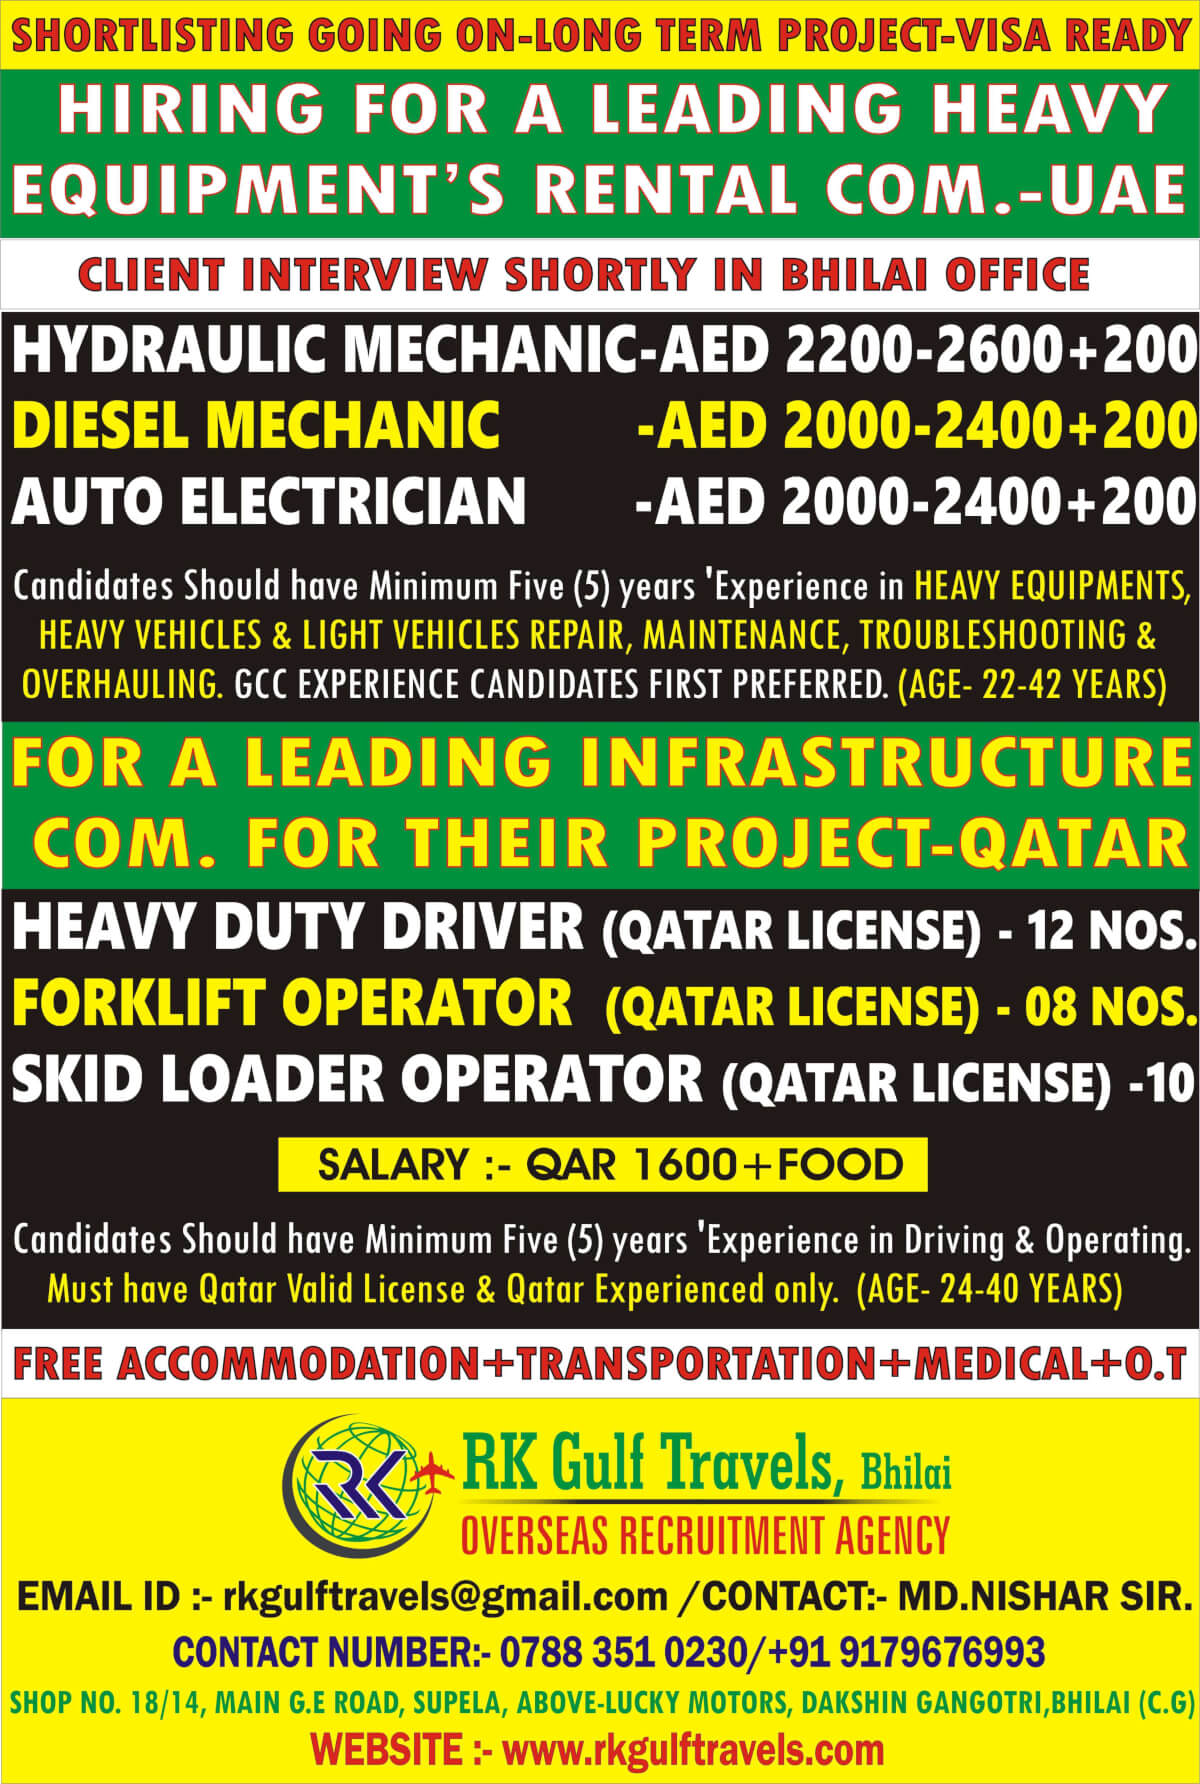 URGENTLY REQUIRED FOR A LEADING COMPANY-UAE/QATAR